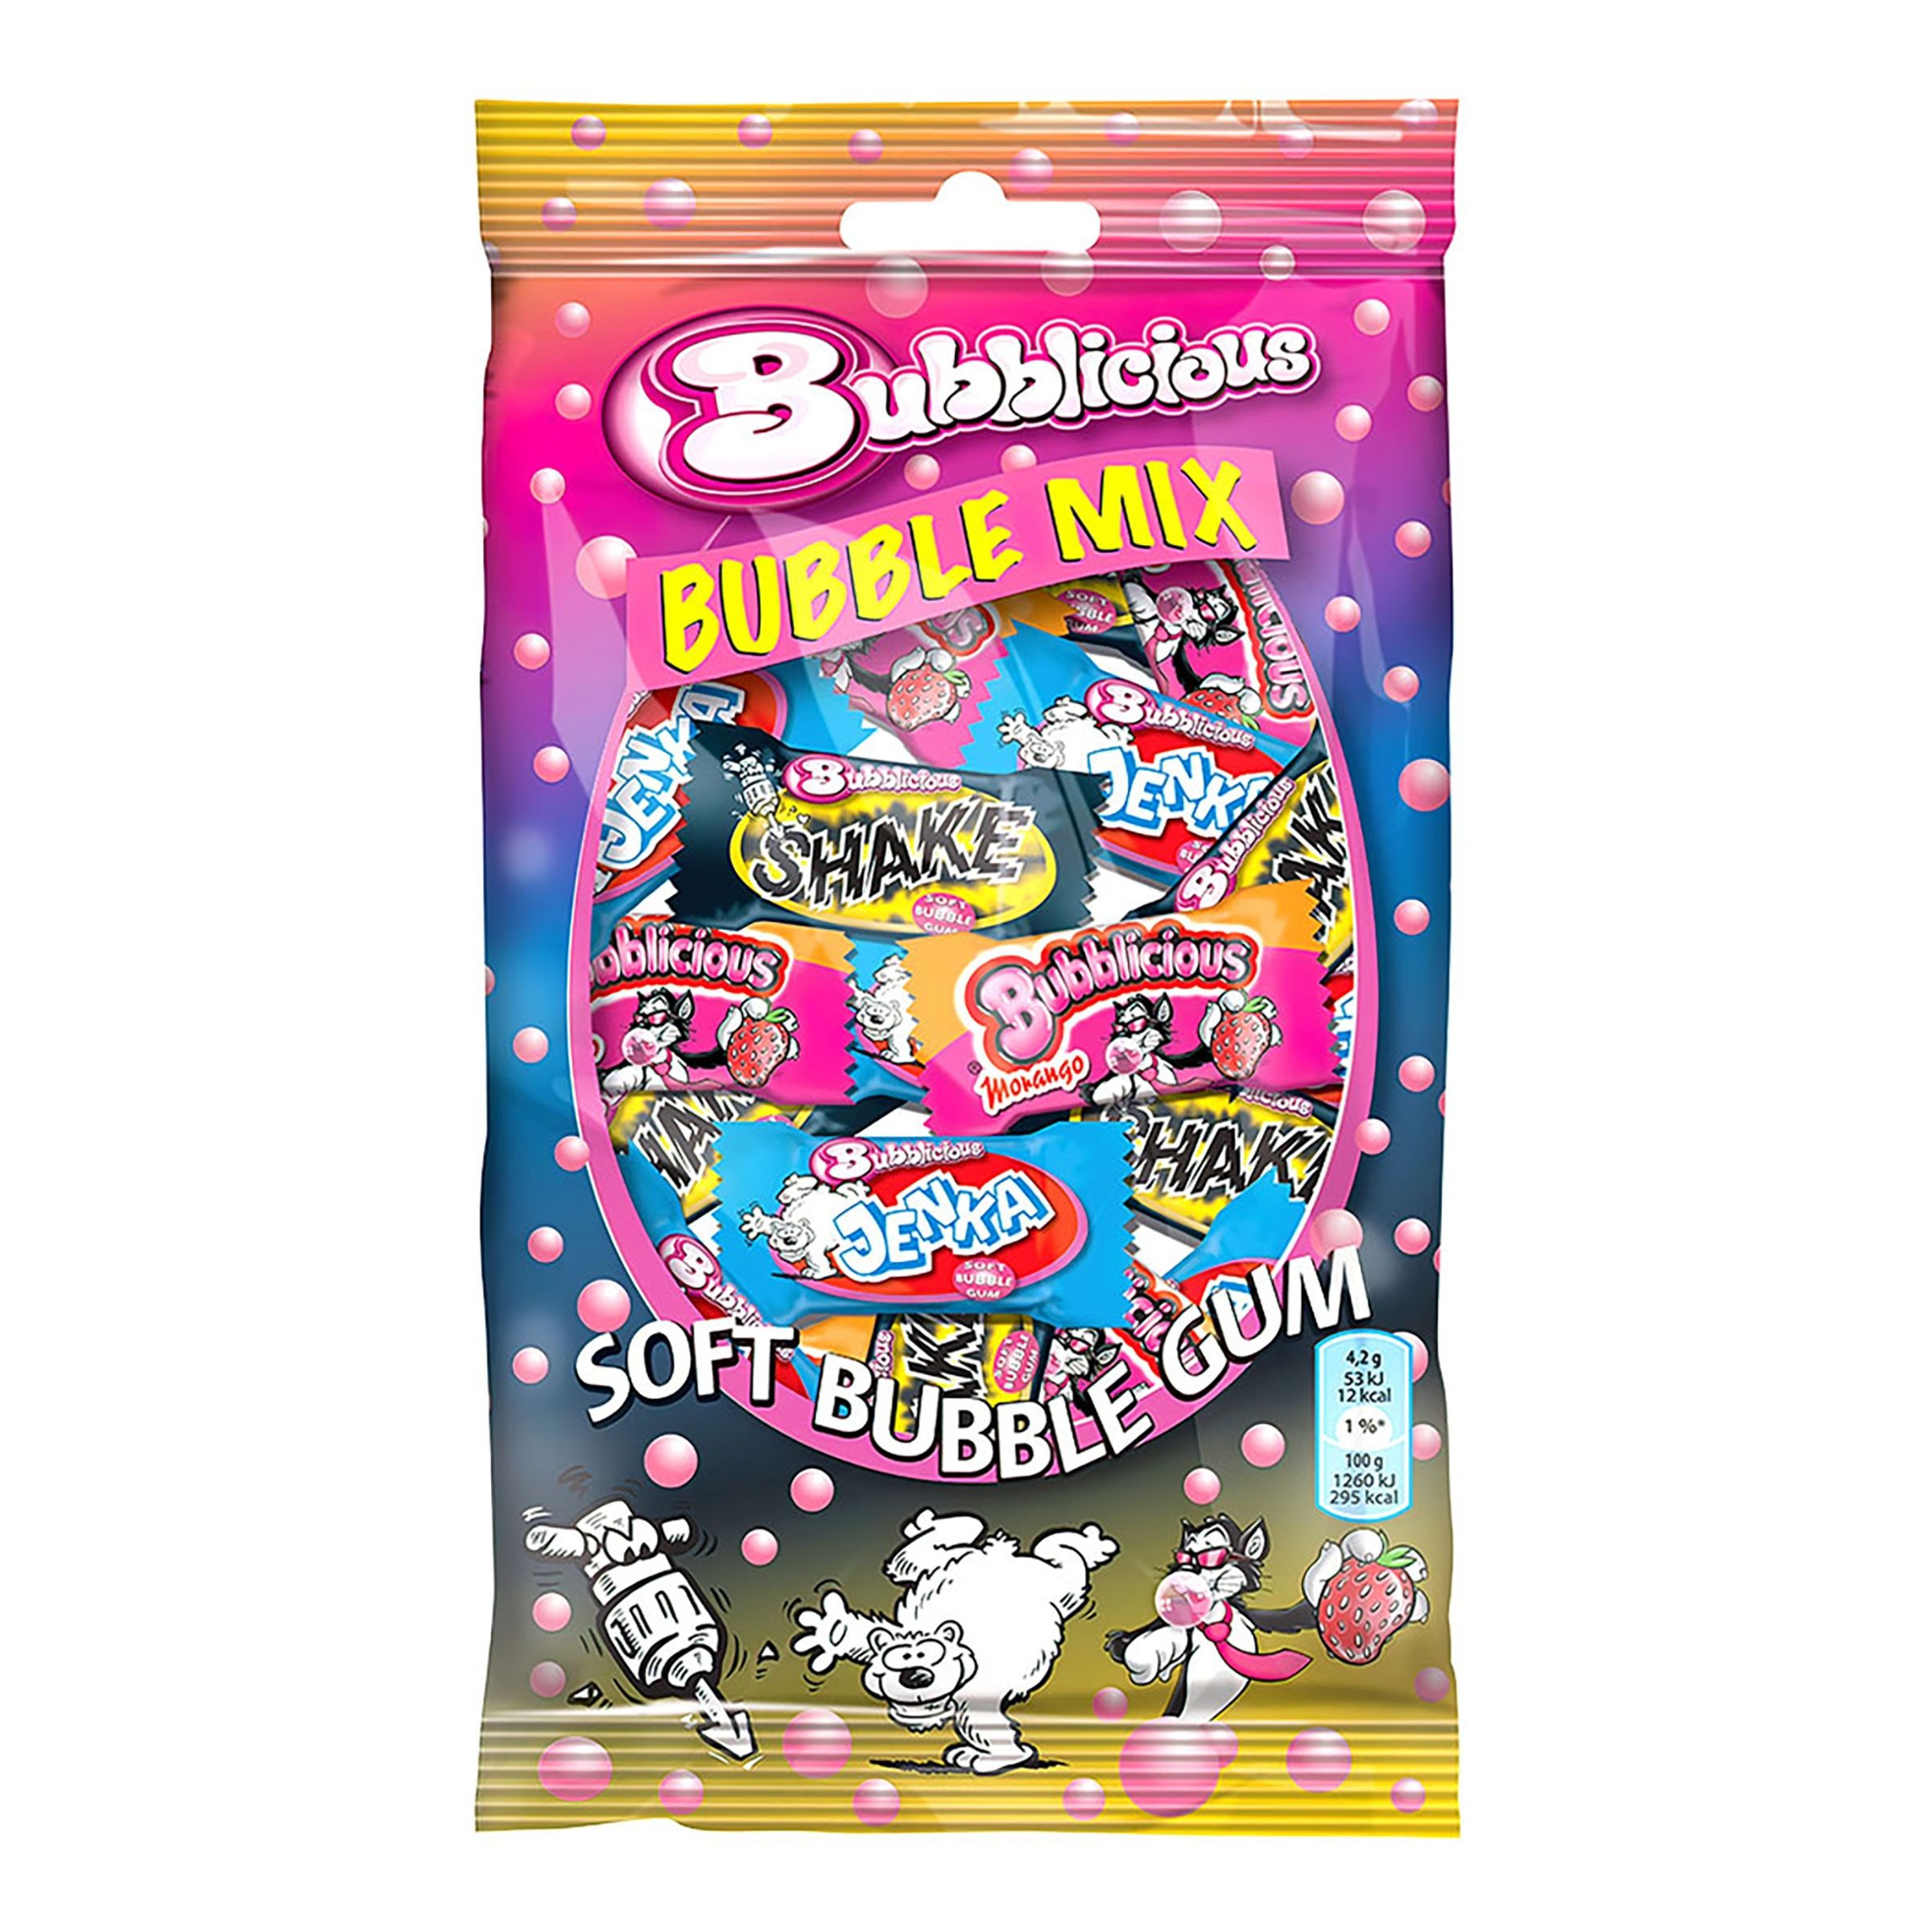 Bubblicious Tuggummi Mix - 15-pack